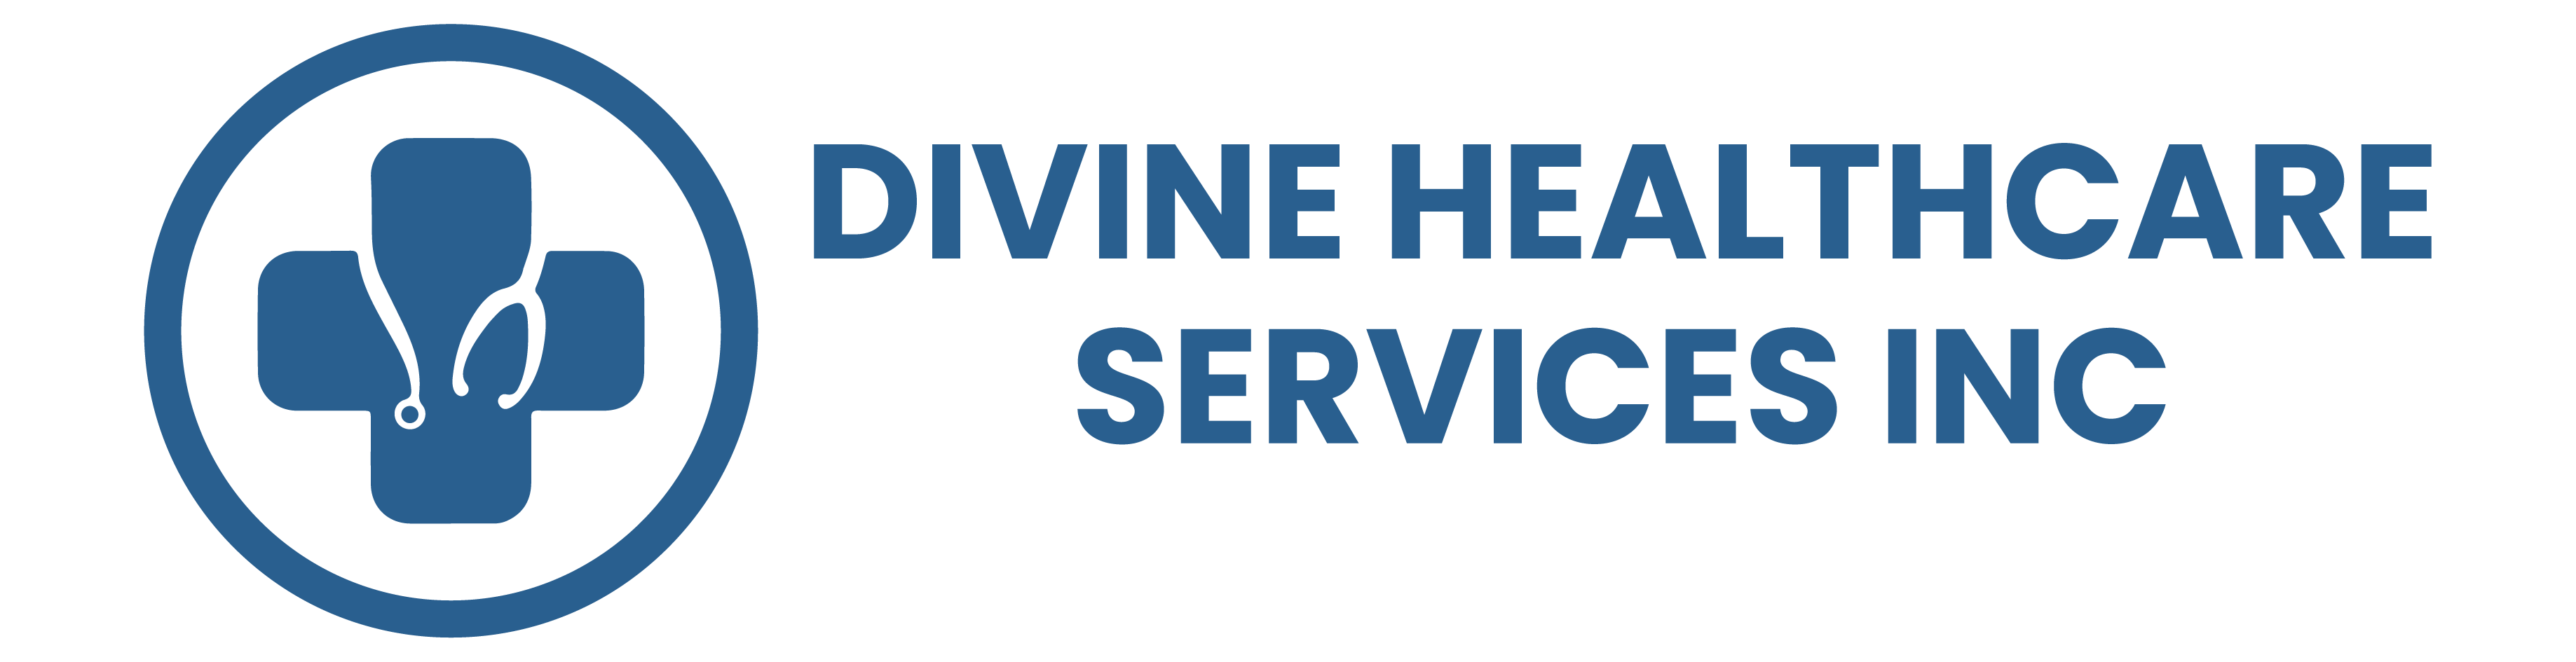 Divine Healthcare Services